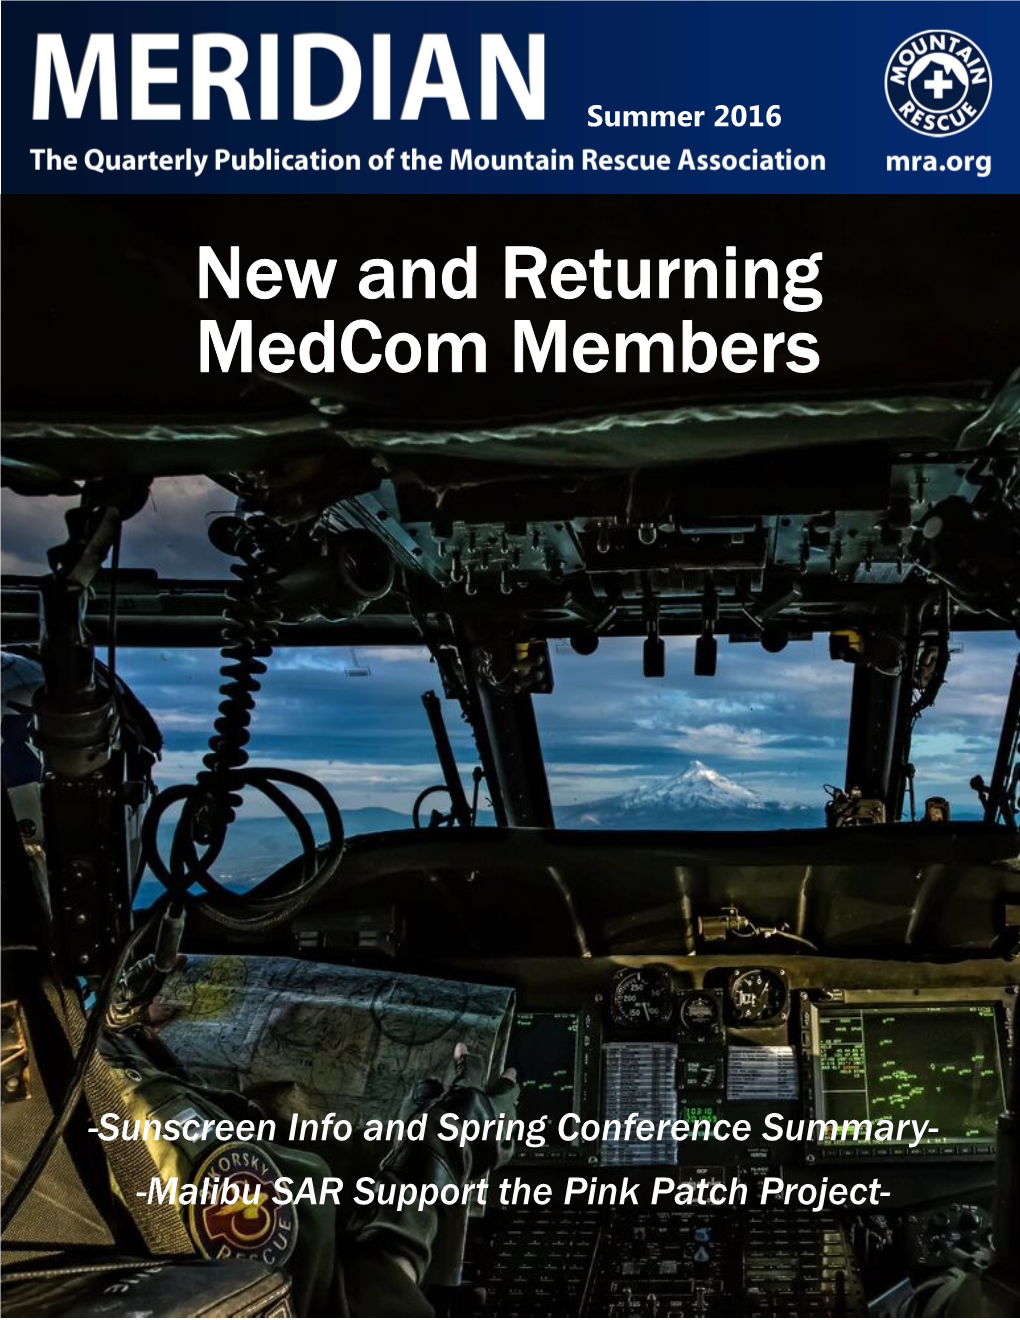 New and Returning Medcom Members